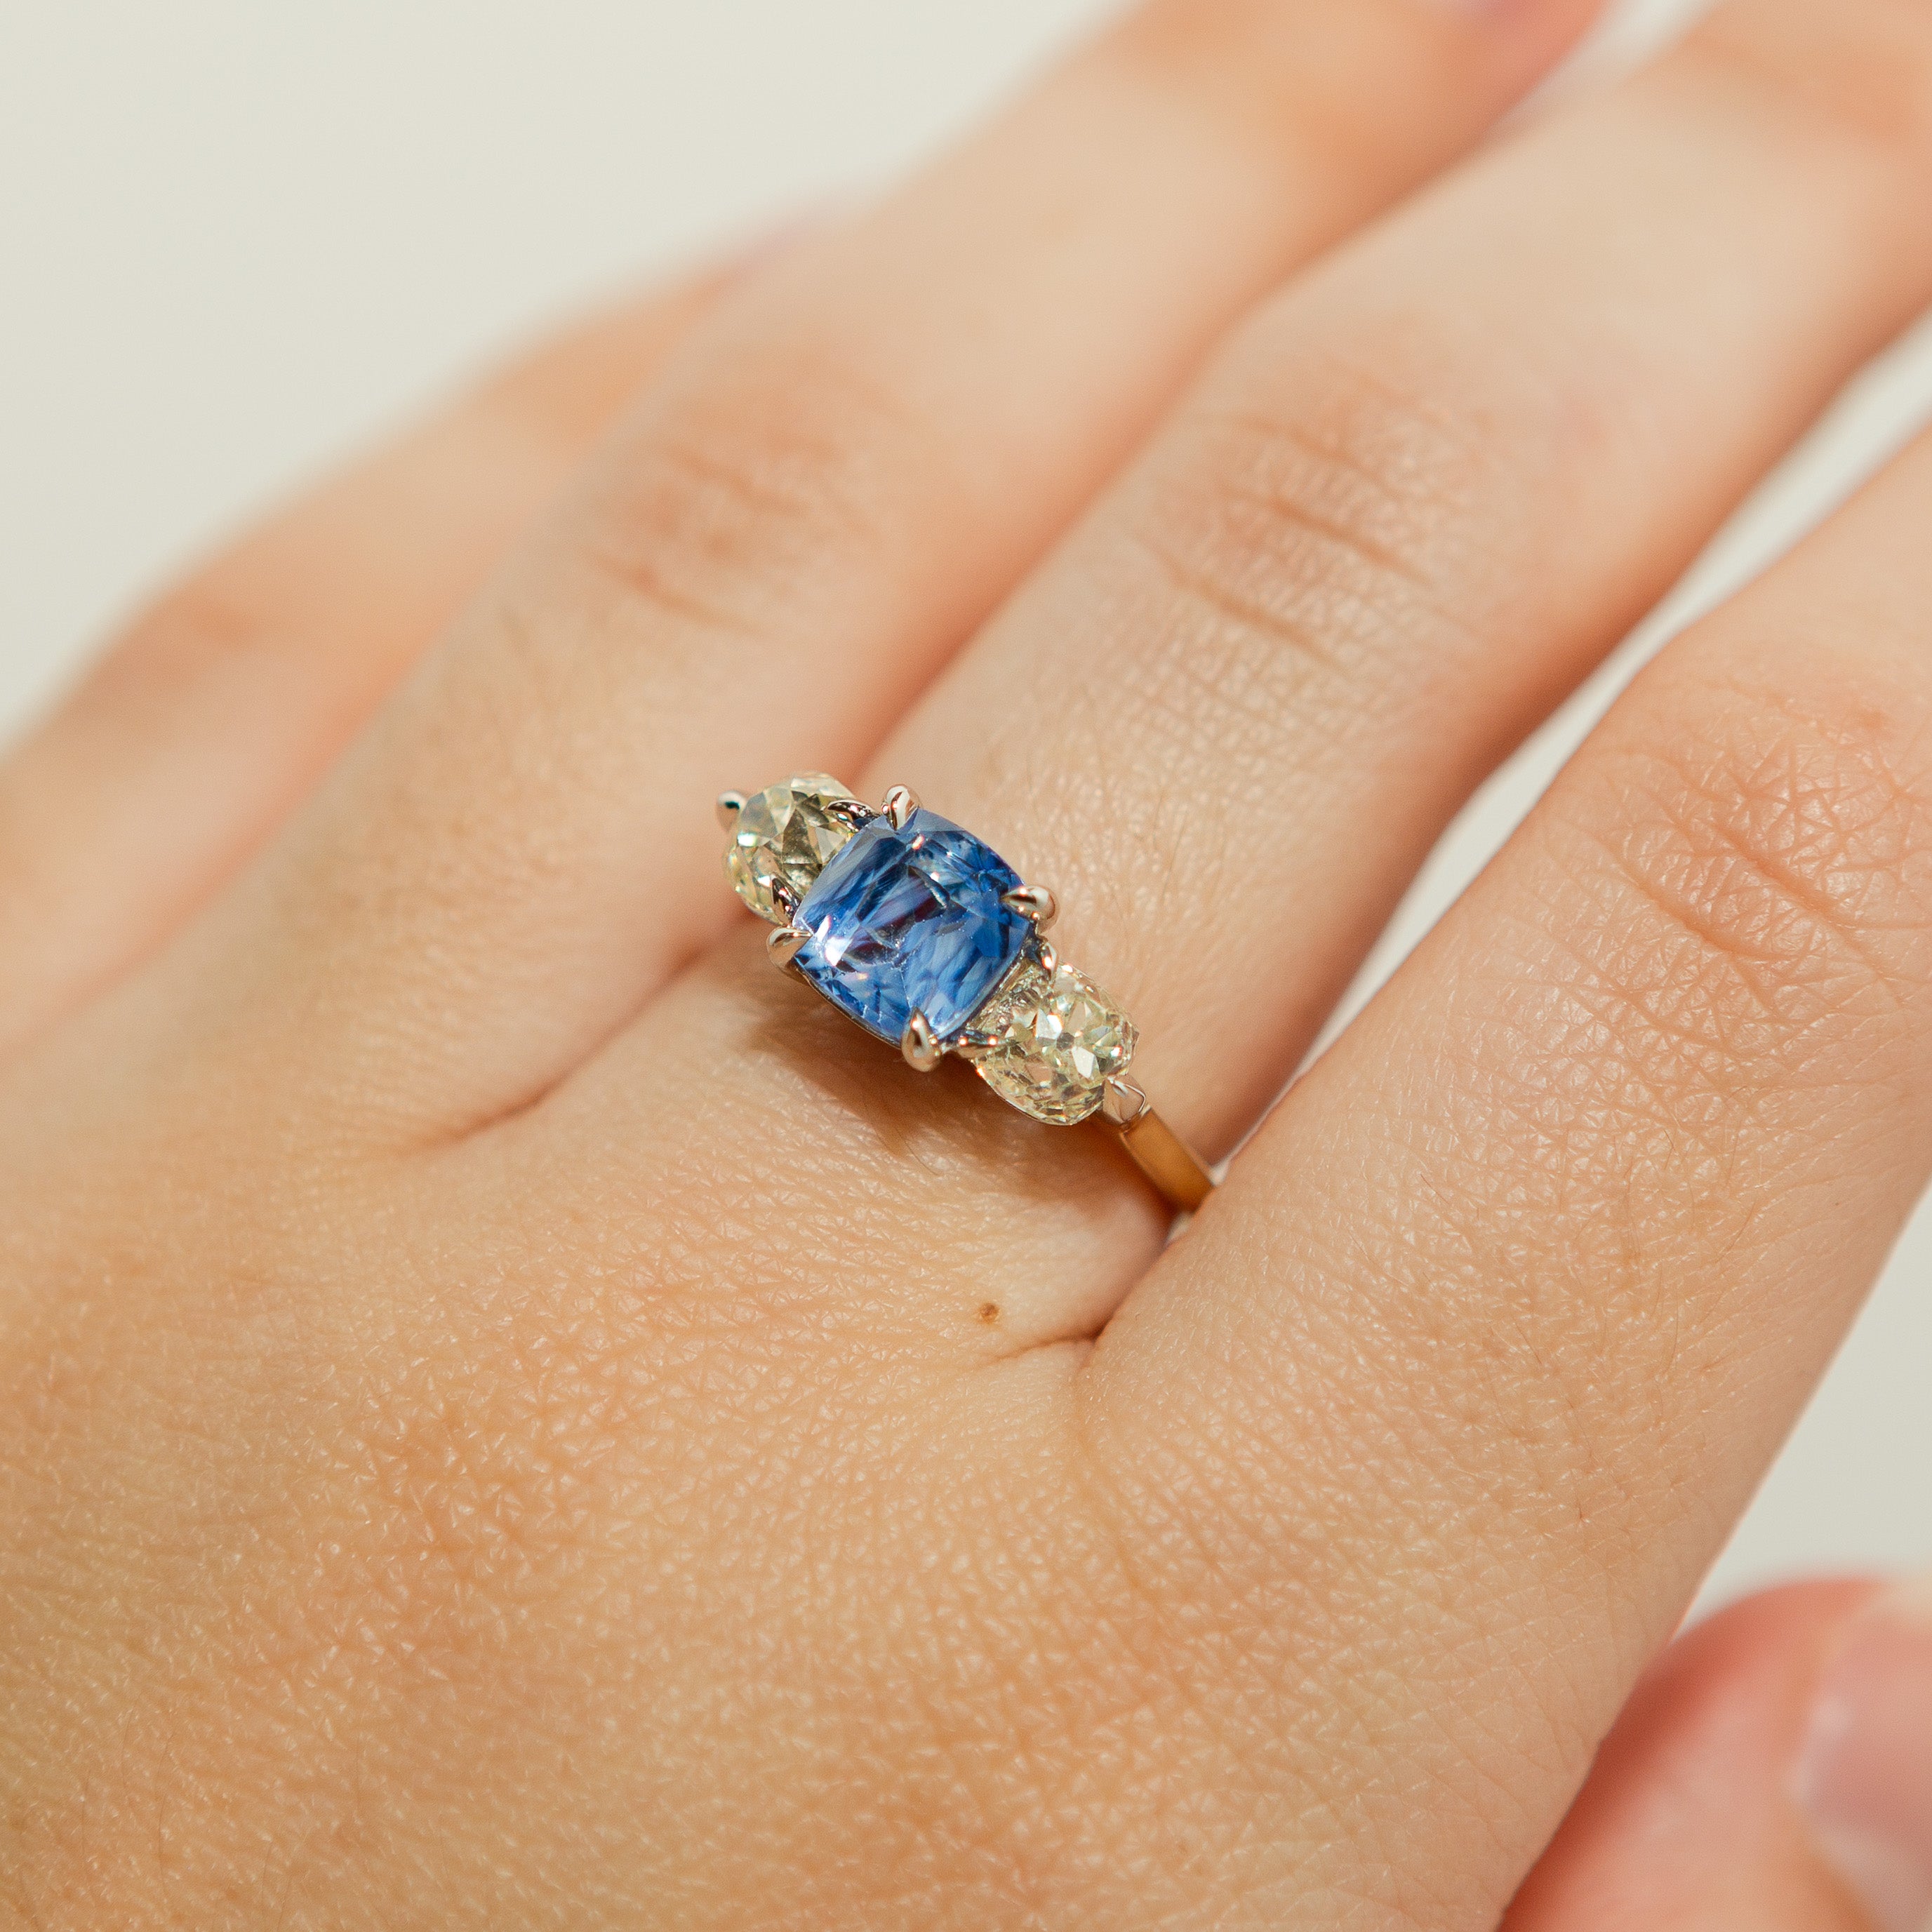 Discover more than 139 cornflower blue sapphire earrings